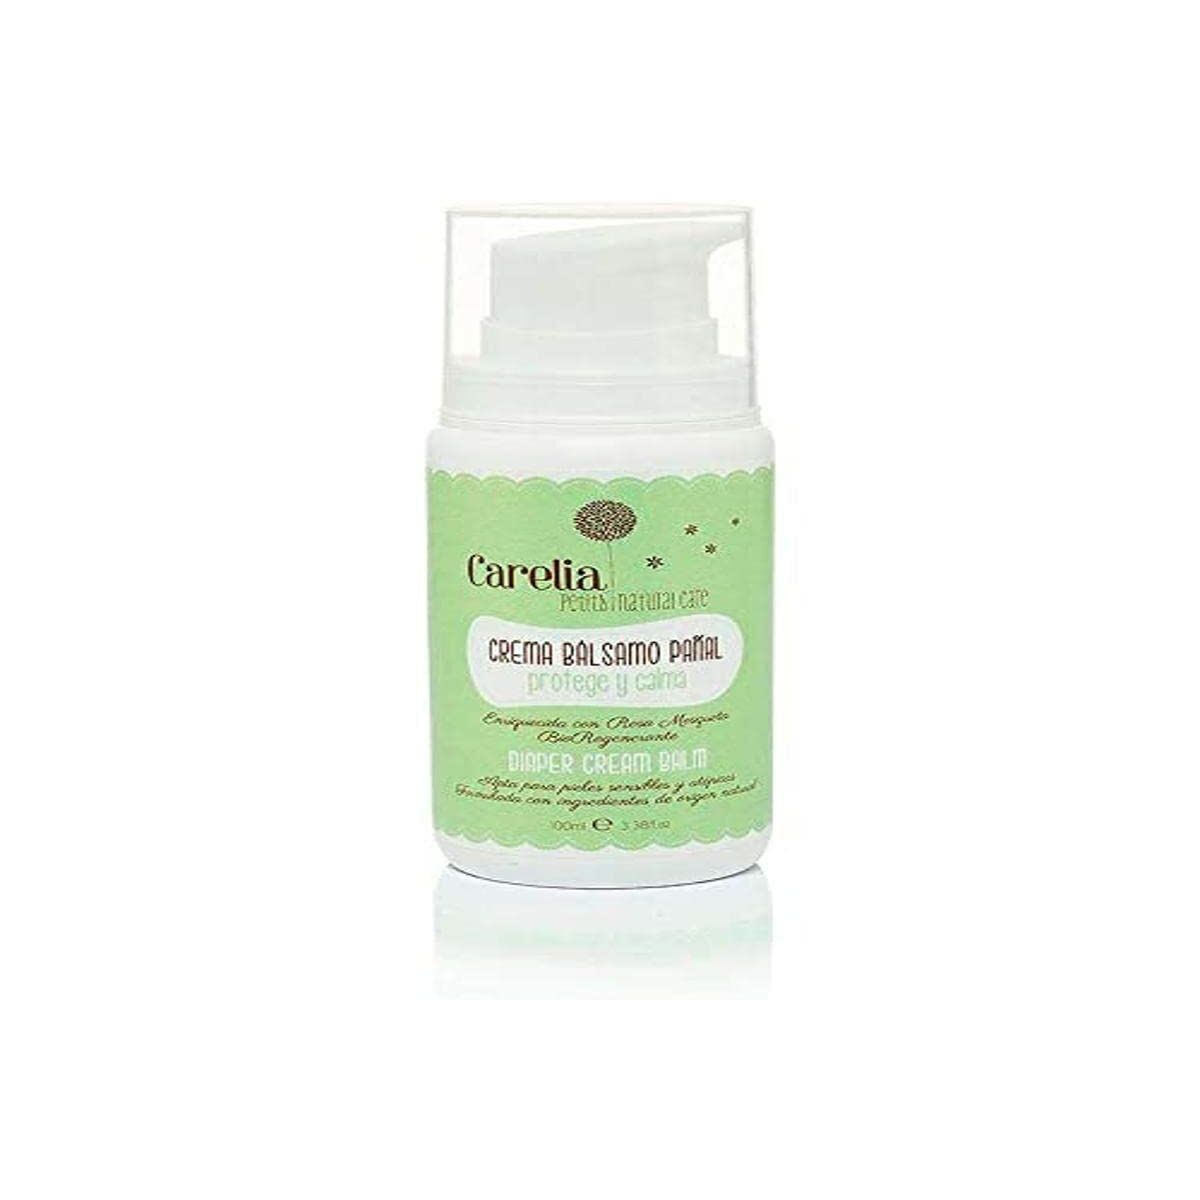 Daily Care Cream for Nappy Area Carelia Petits (100 ml)